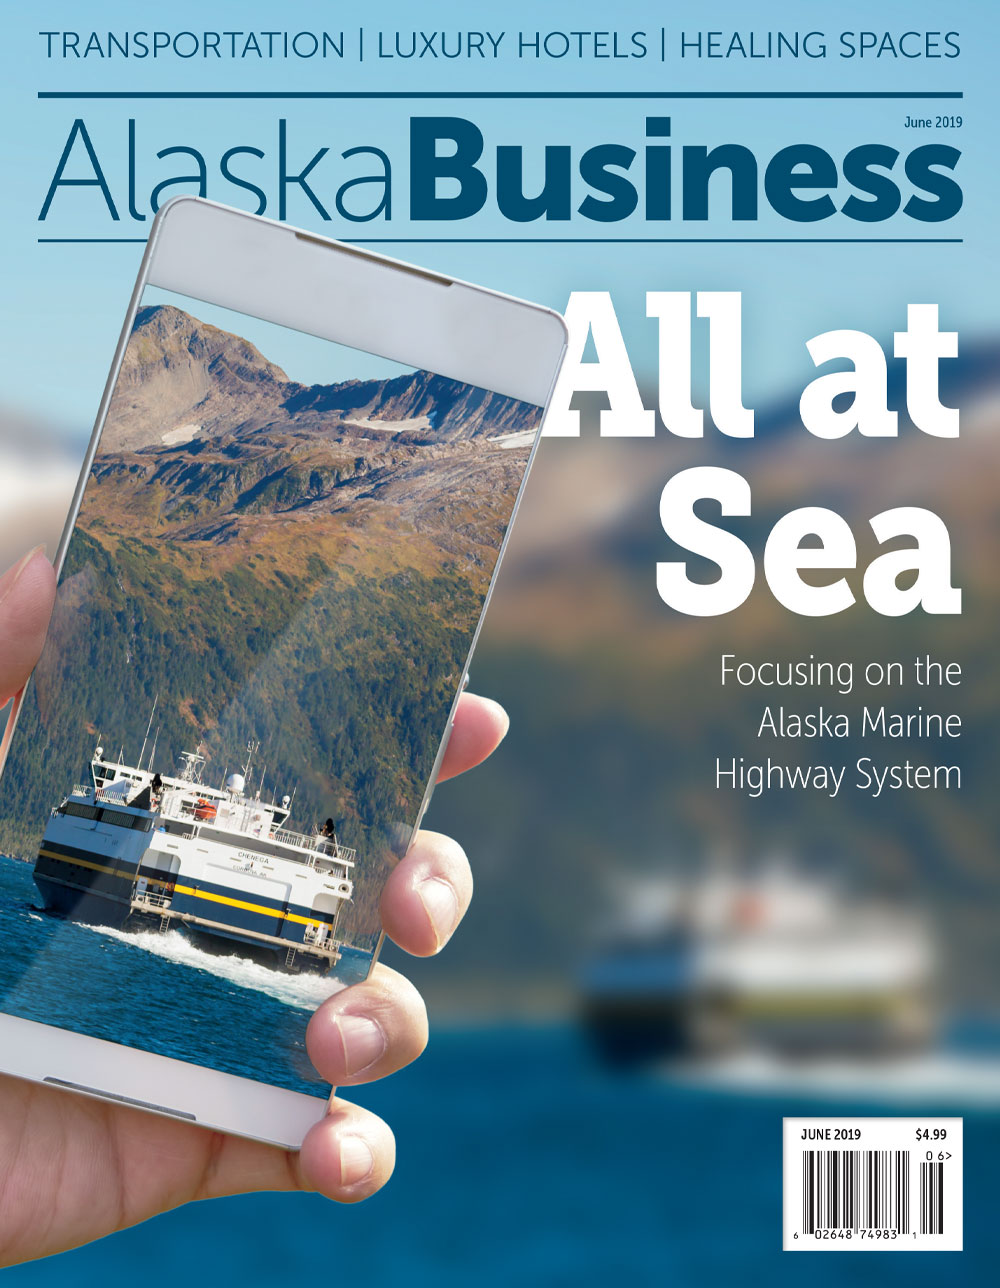 Alaska Business Magazine May 2019 Cover